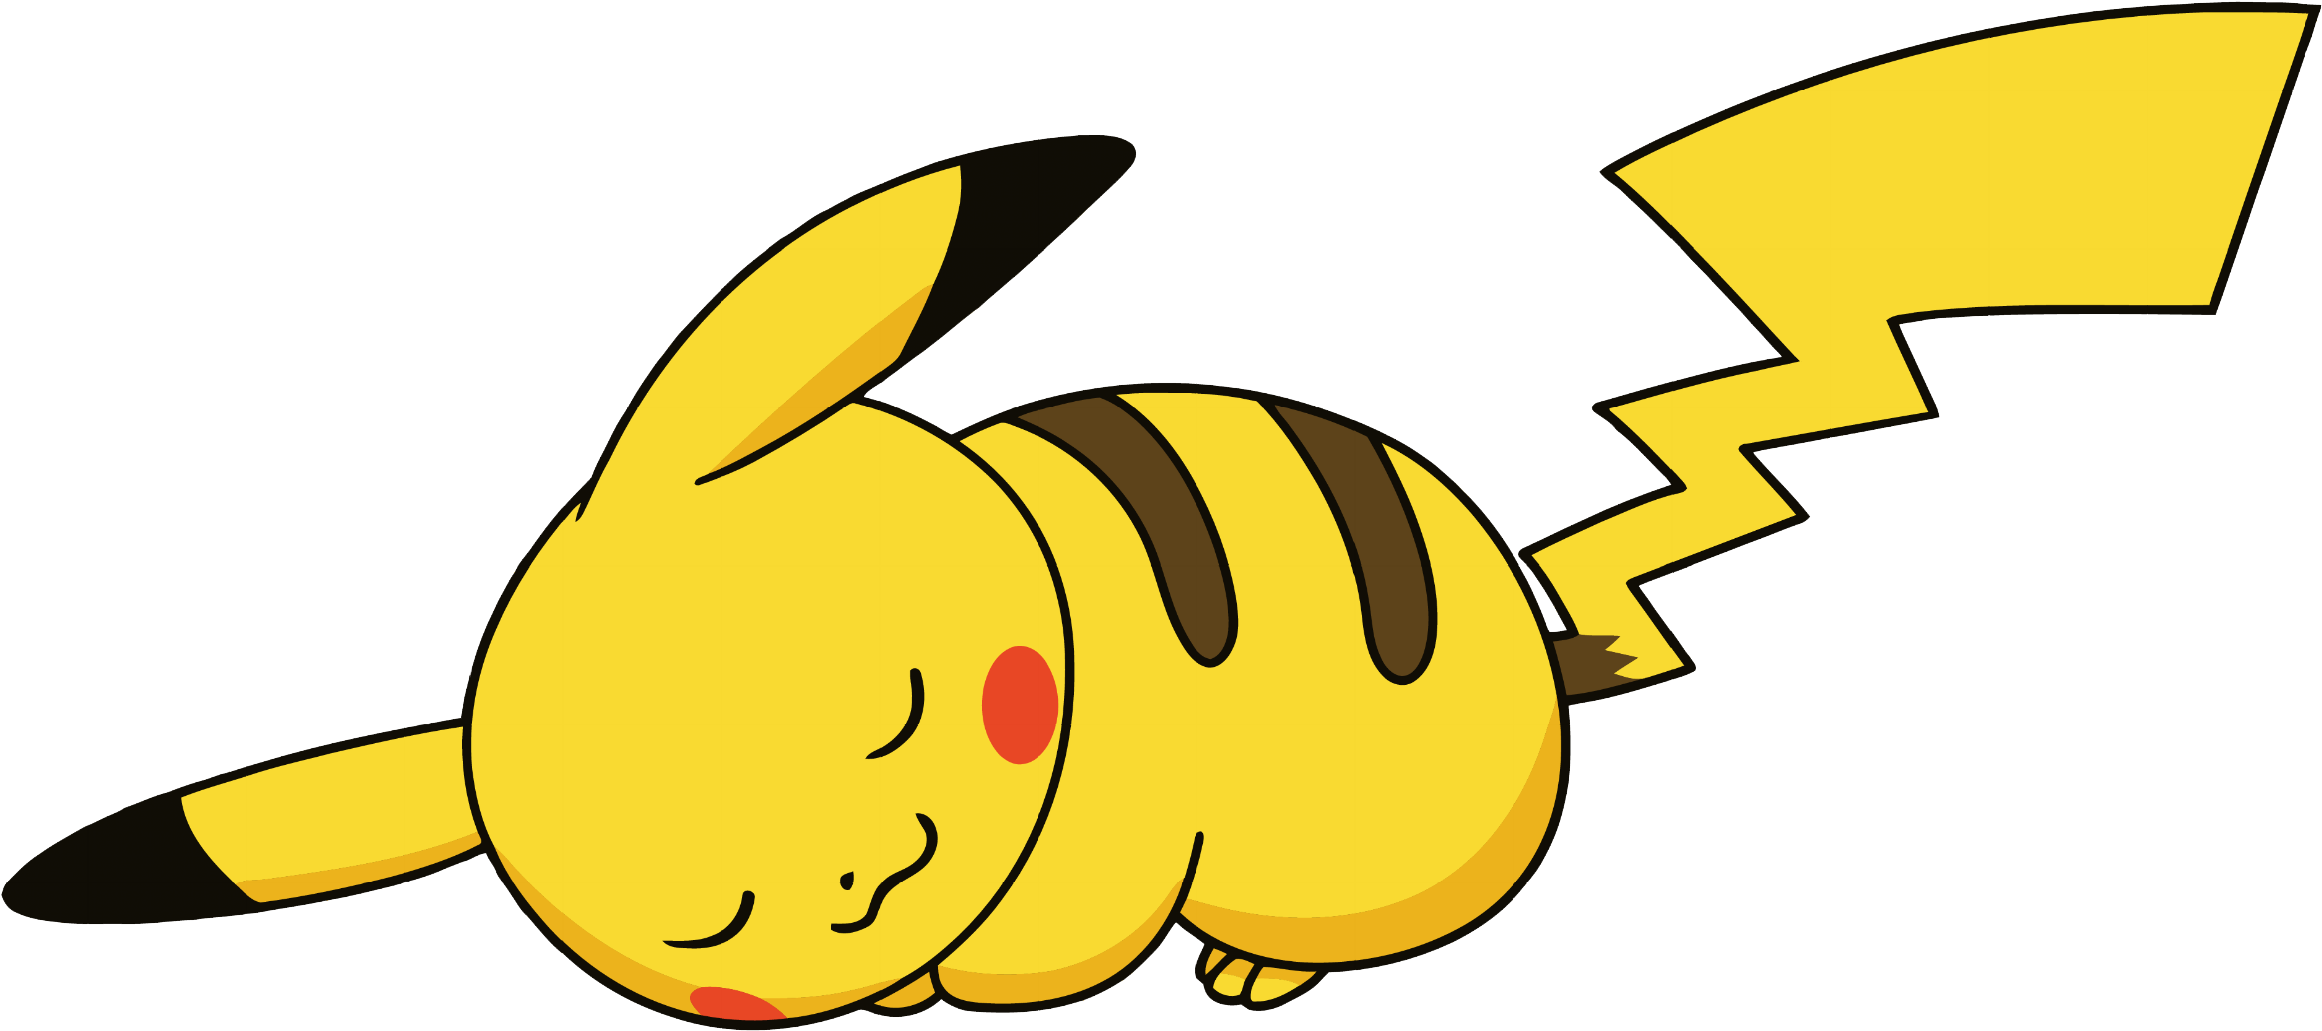 More Like Mudkip By Neuro- - Sleeping Pikachu (2396x1184)